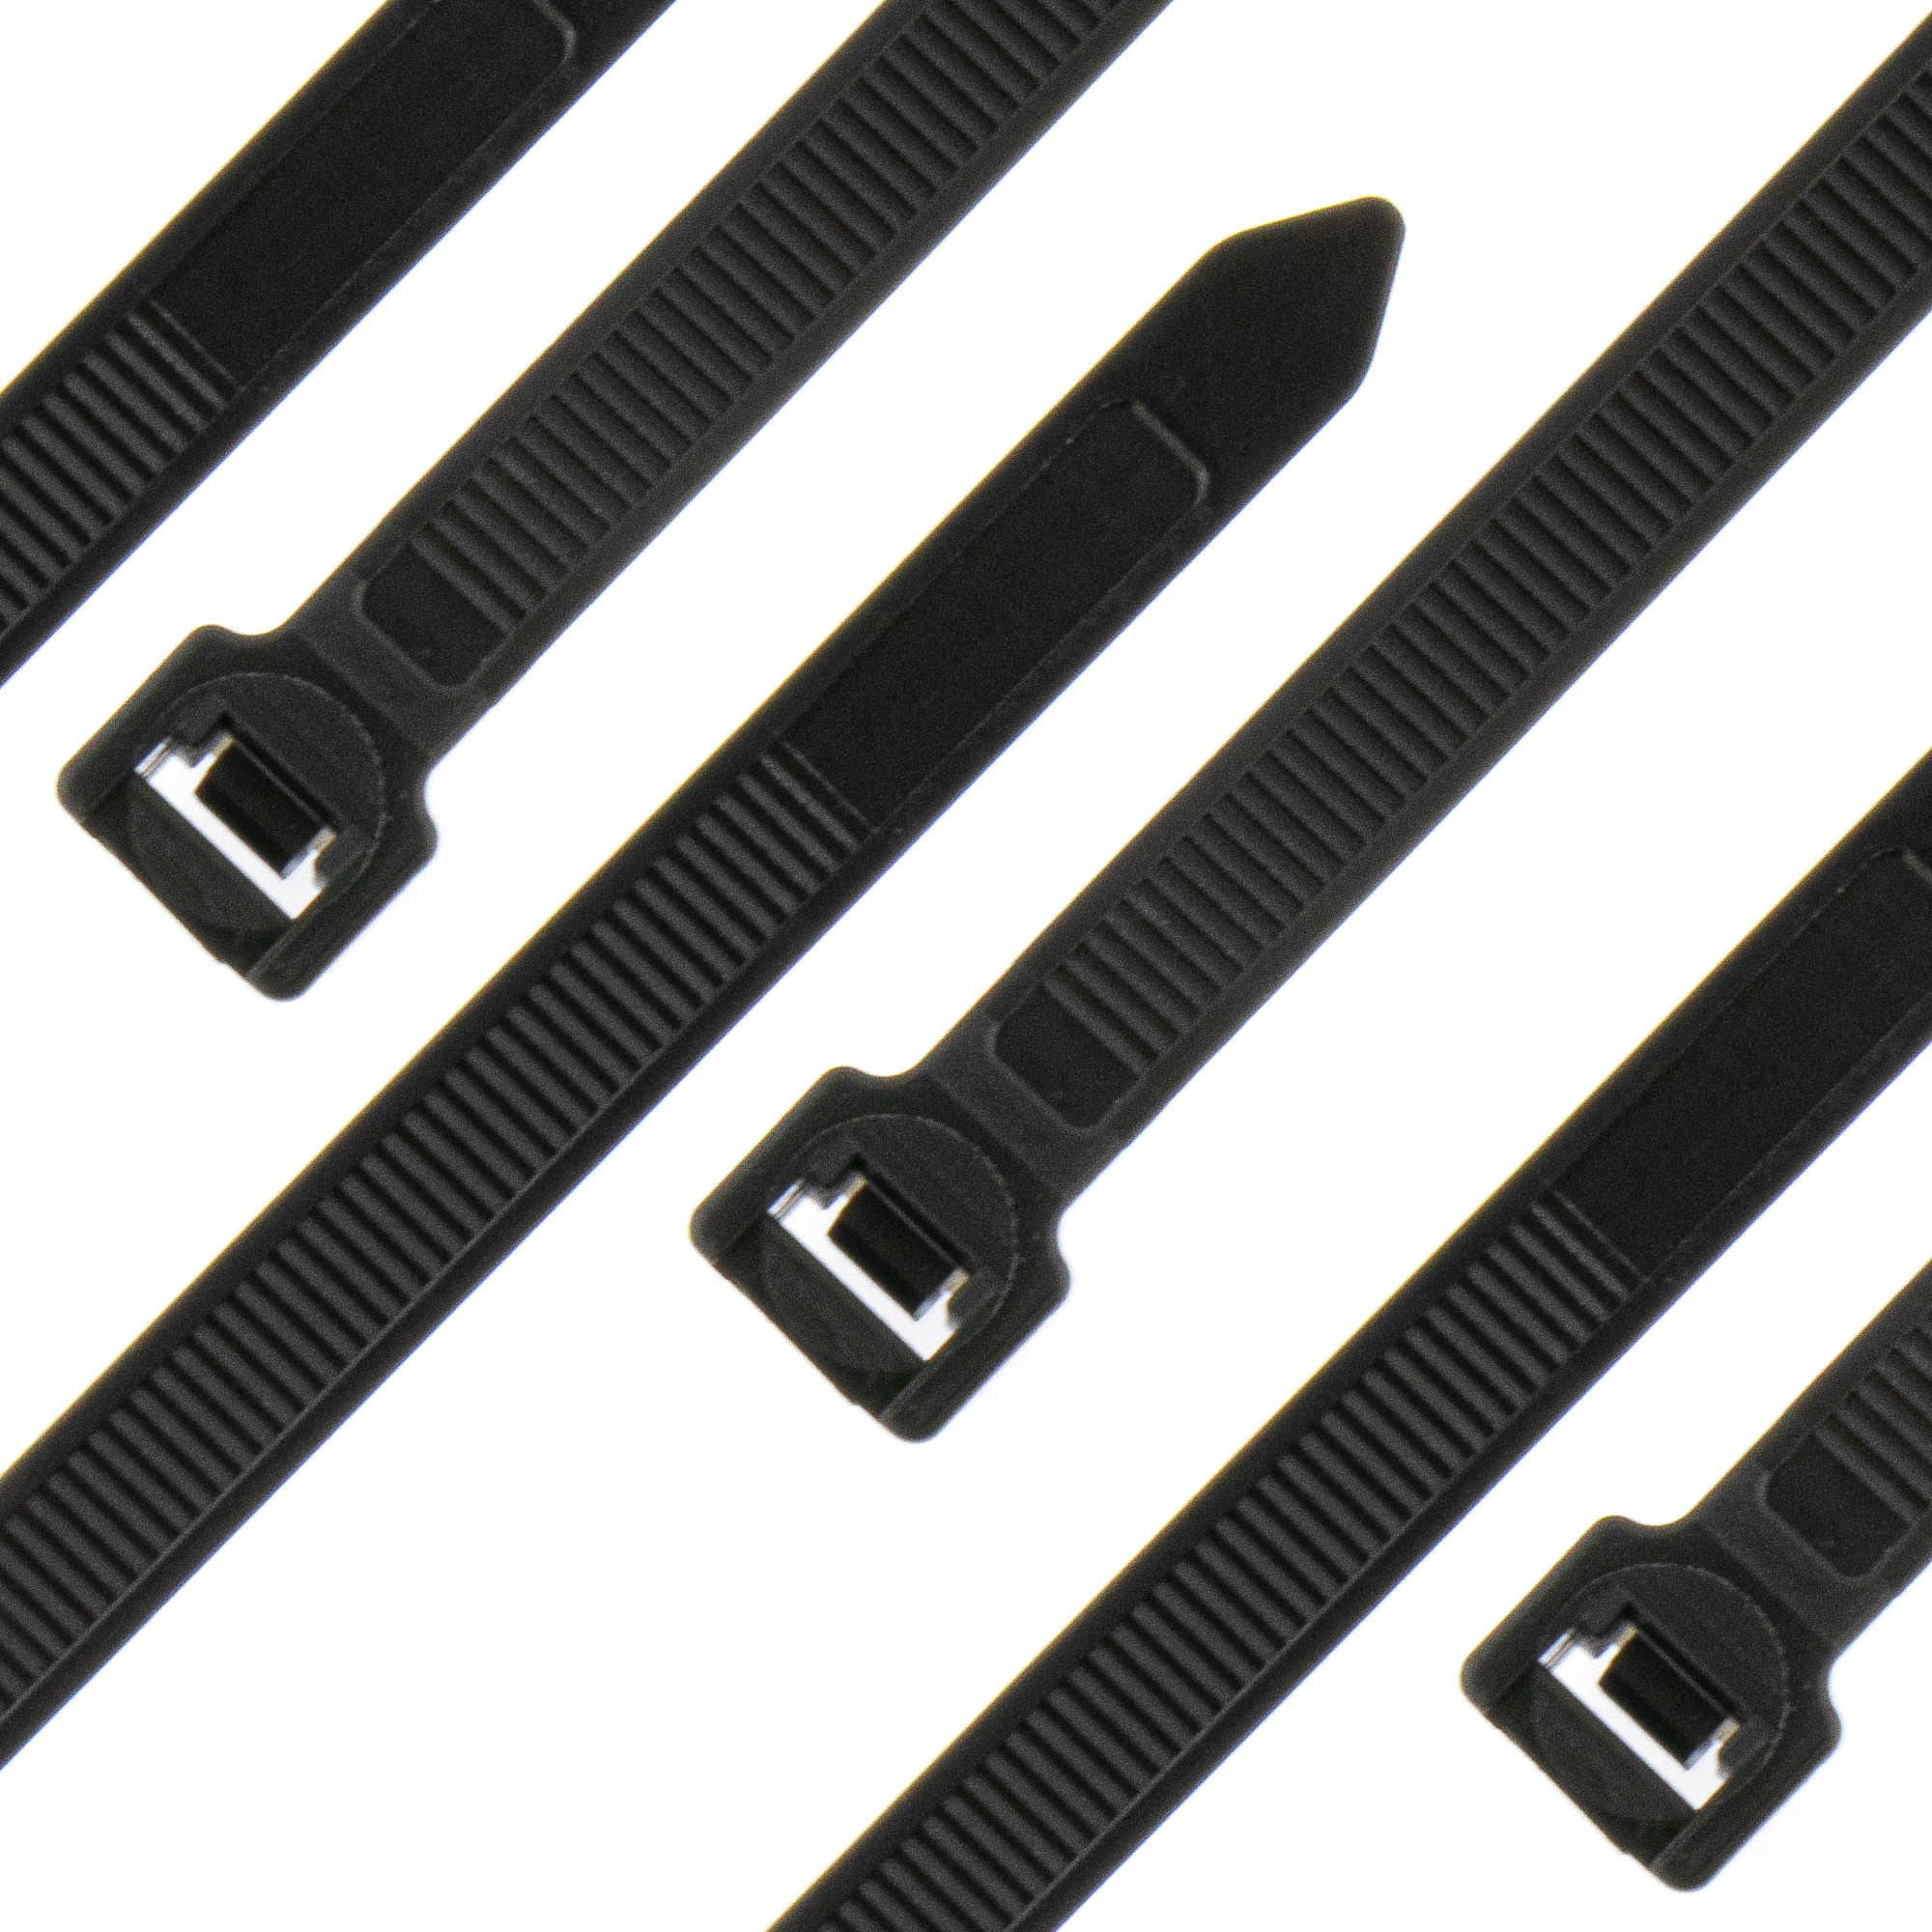 Cable tie self-locking 430 x 9,0mm, black, 100PCS